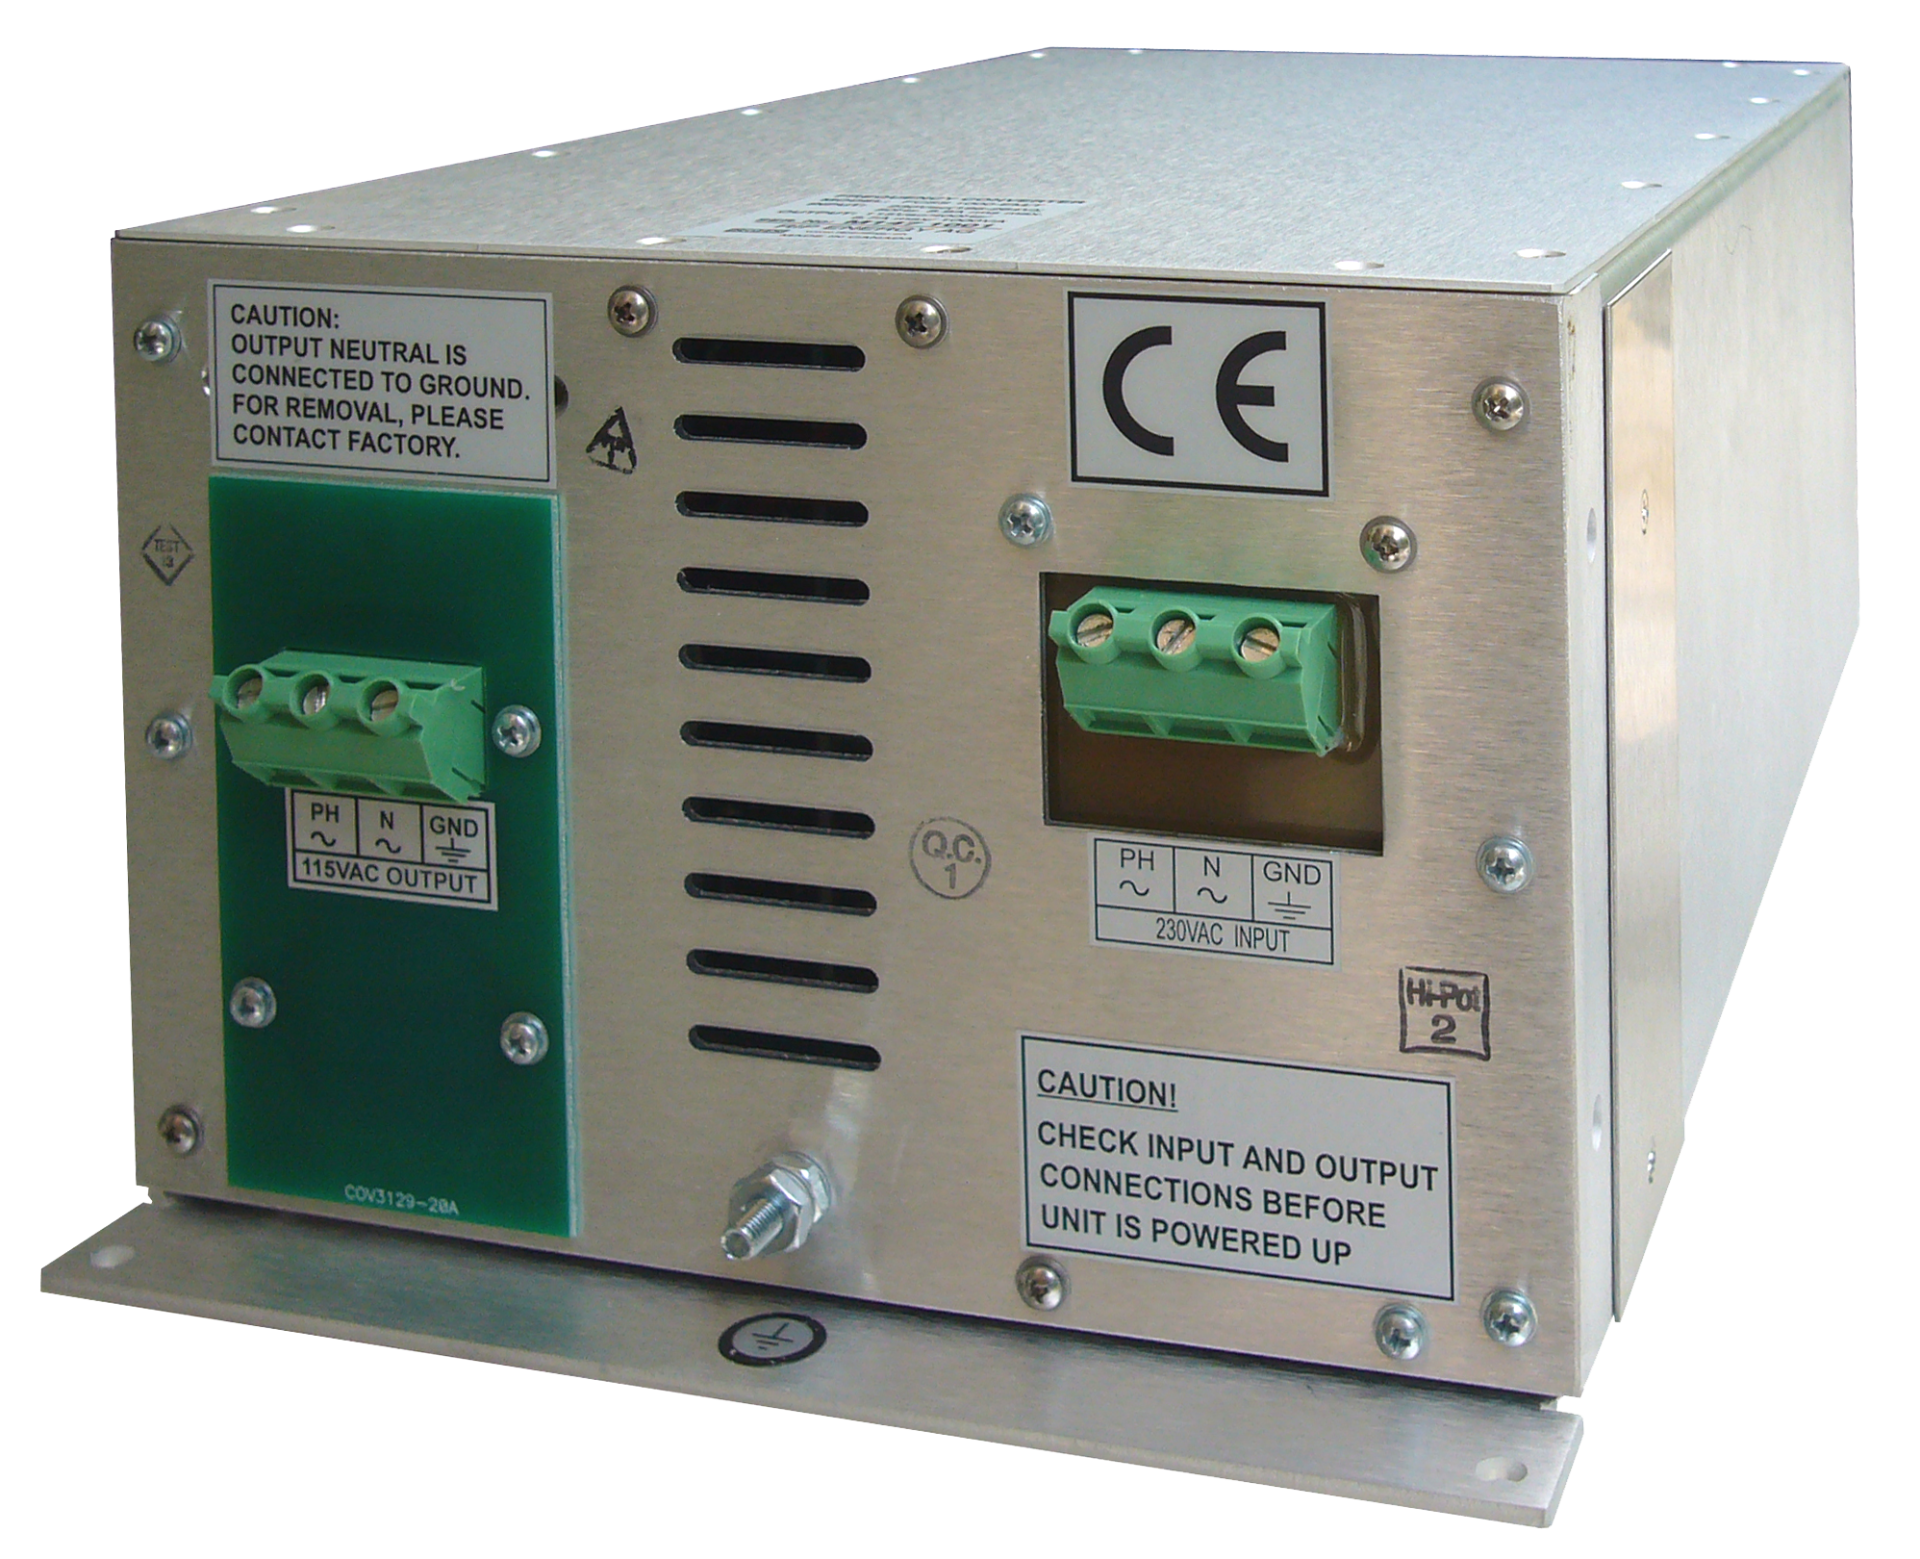 Wechselrichter Industrial Standard RISI 1000/1500